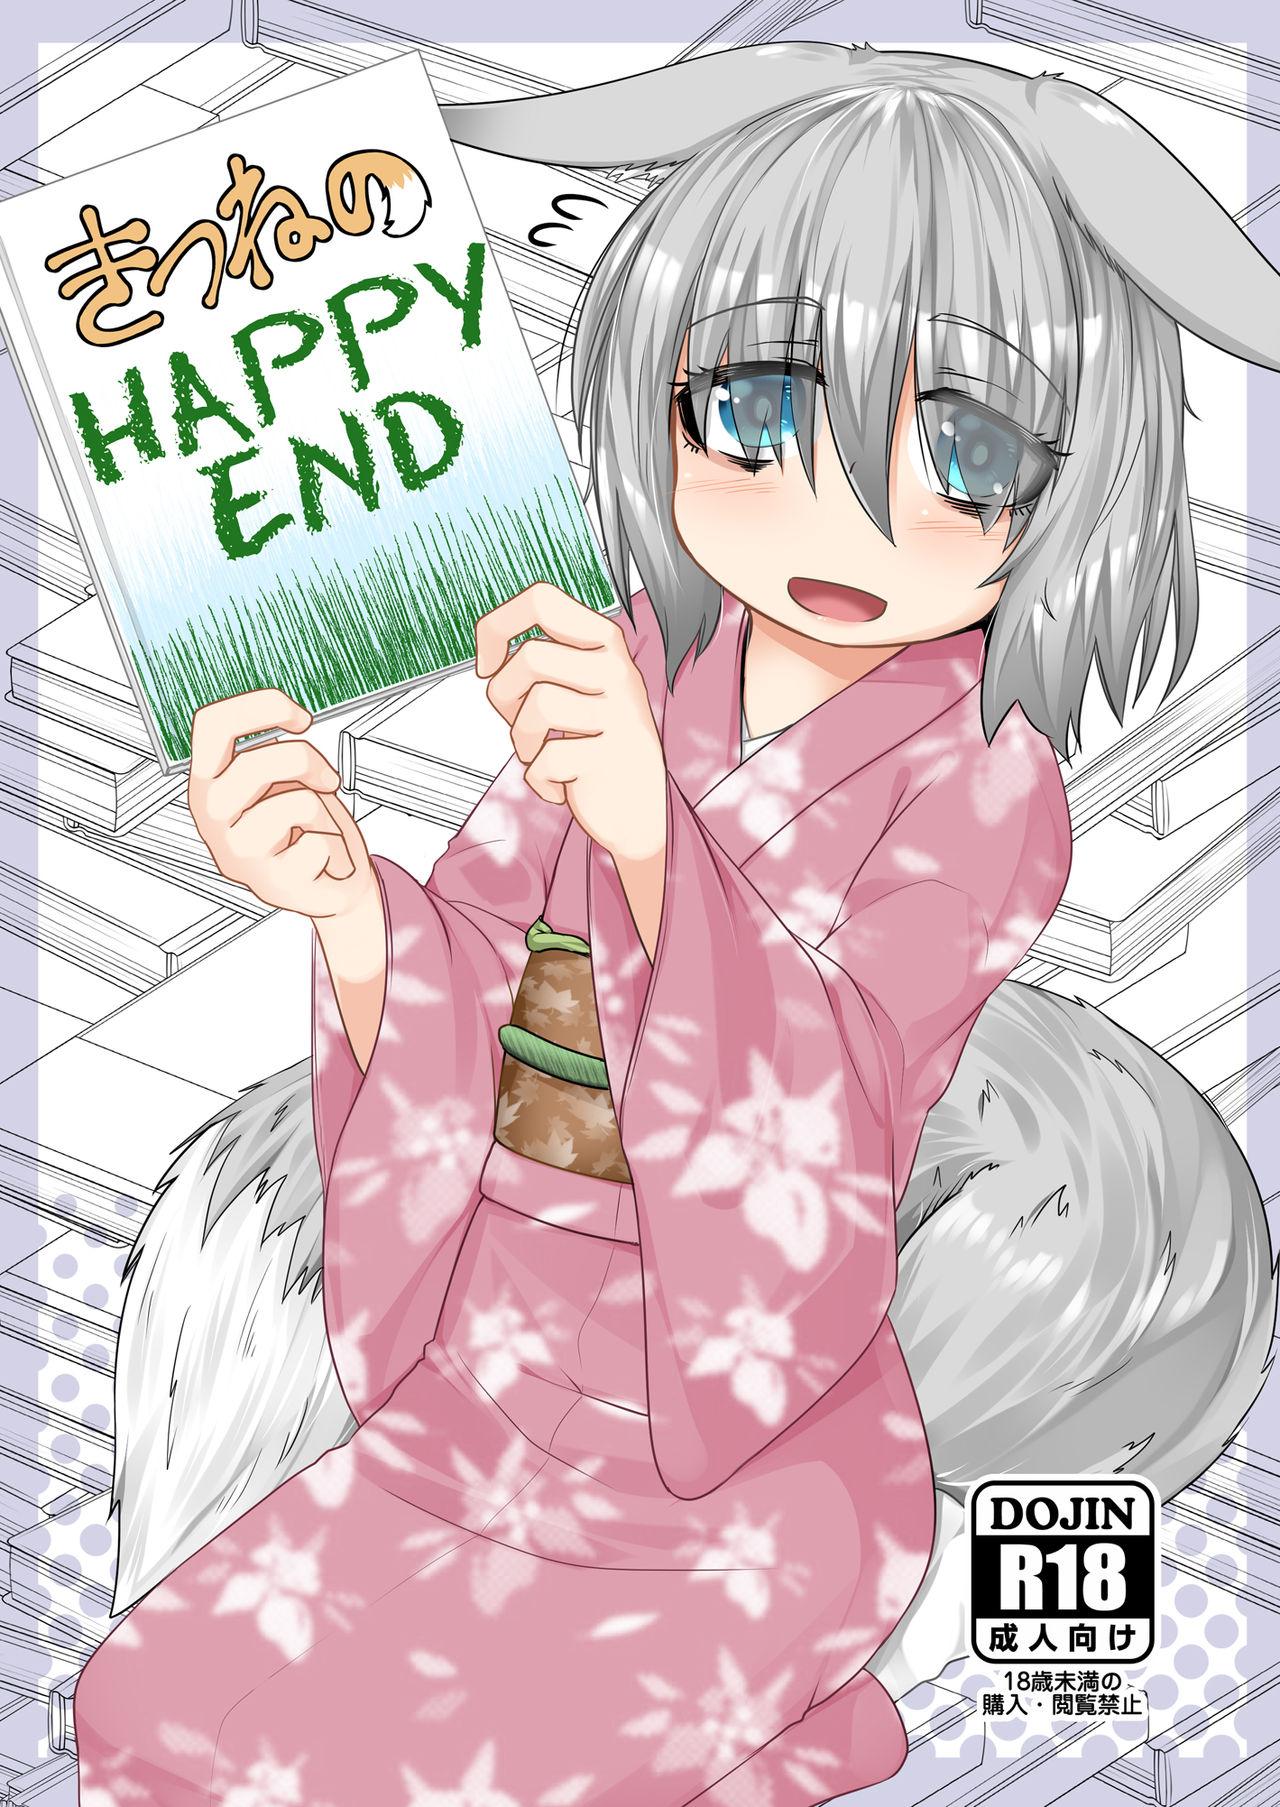 Kitsune no Happy End 1